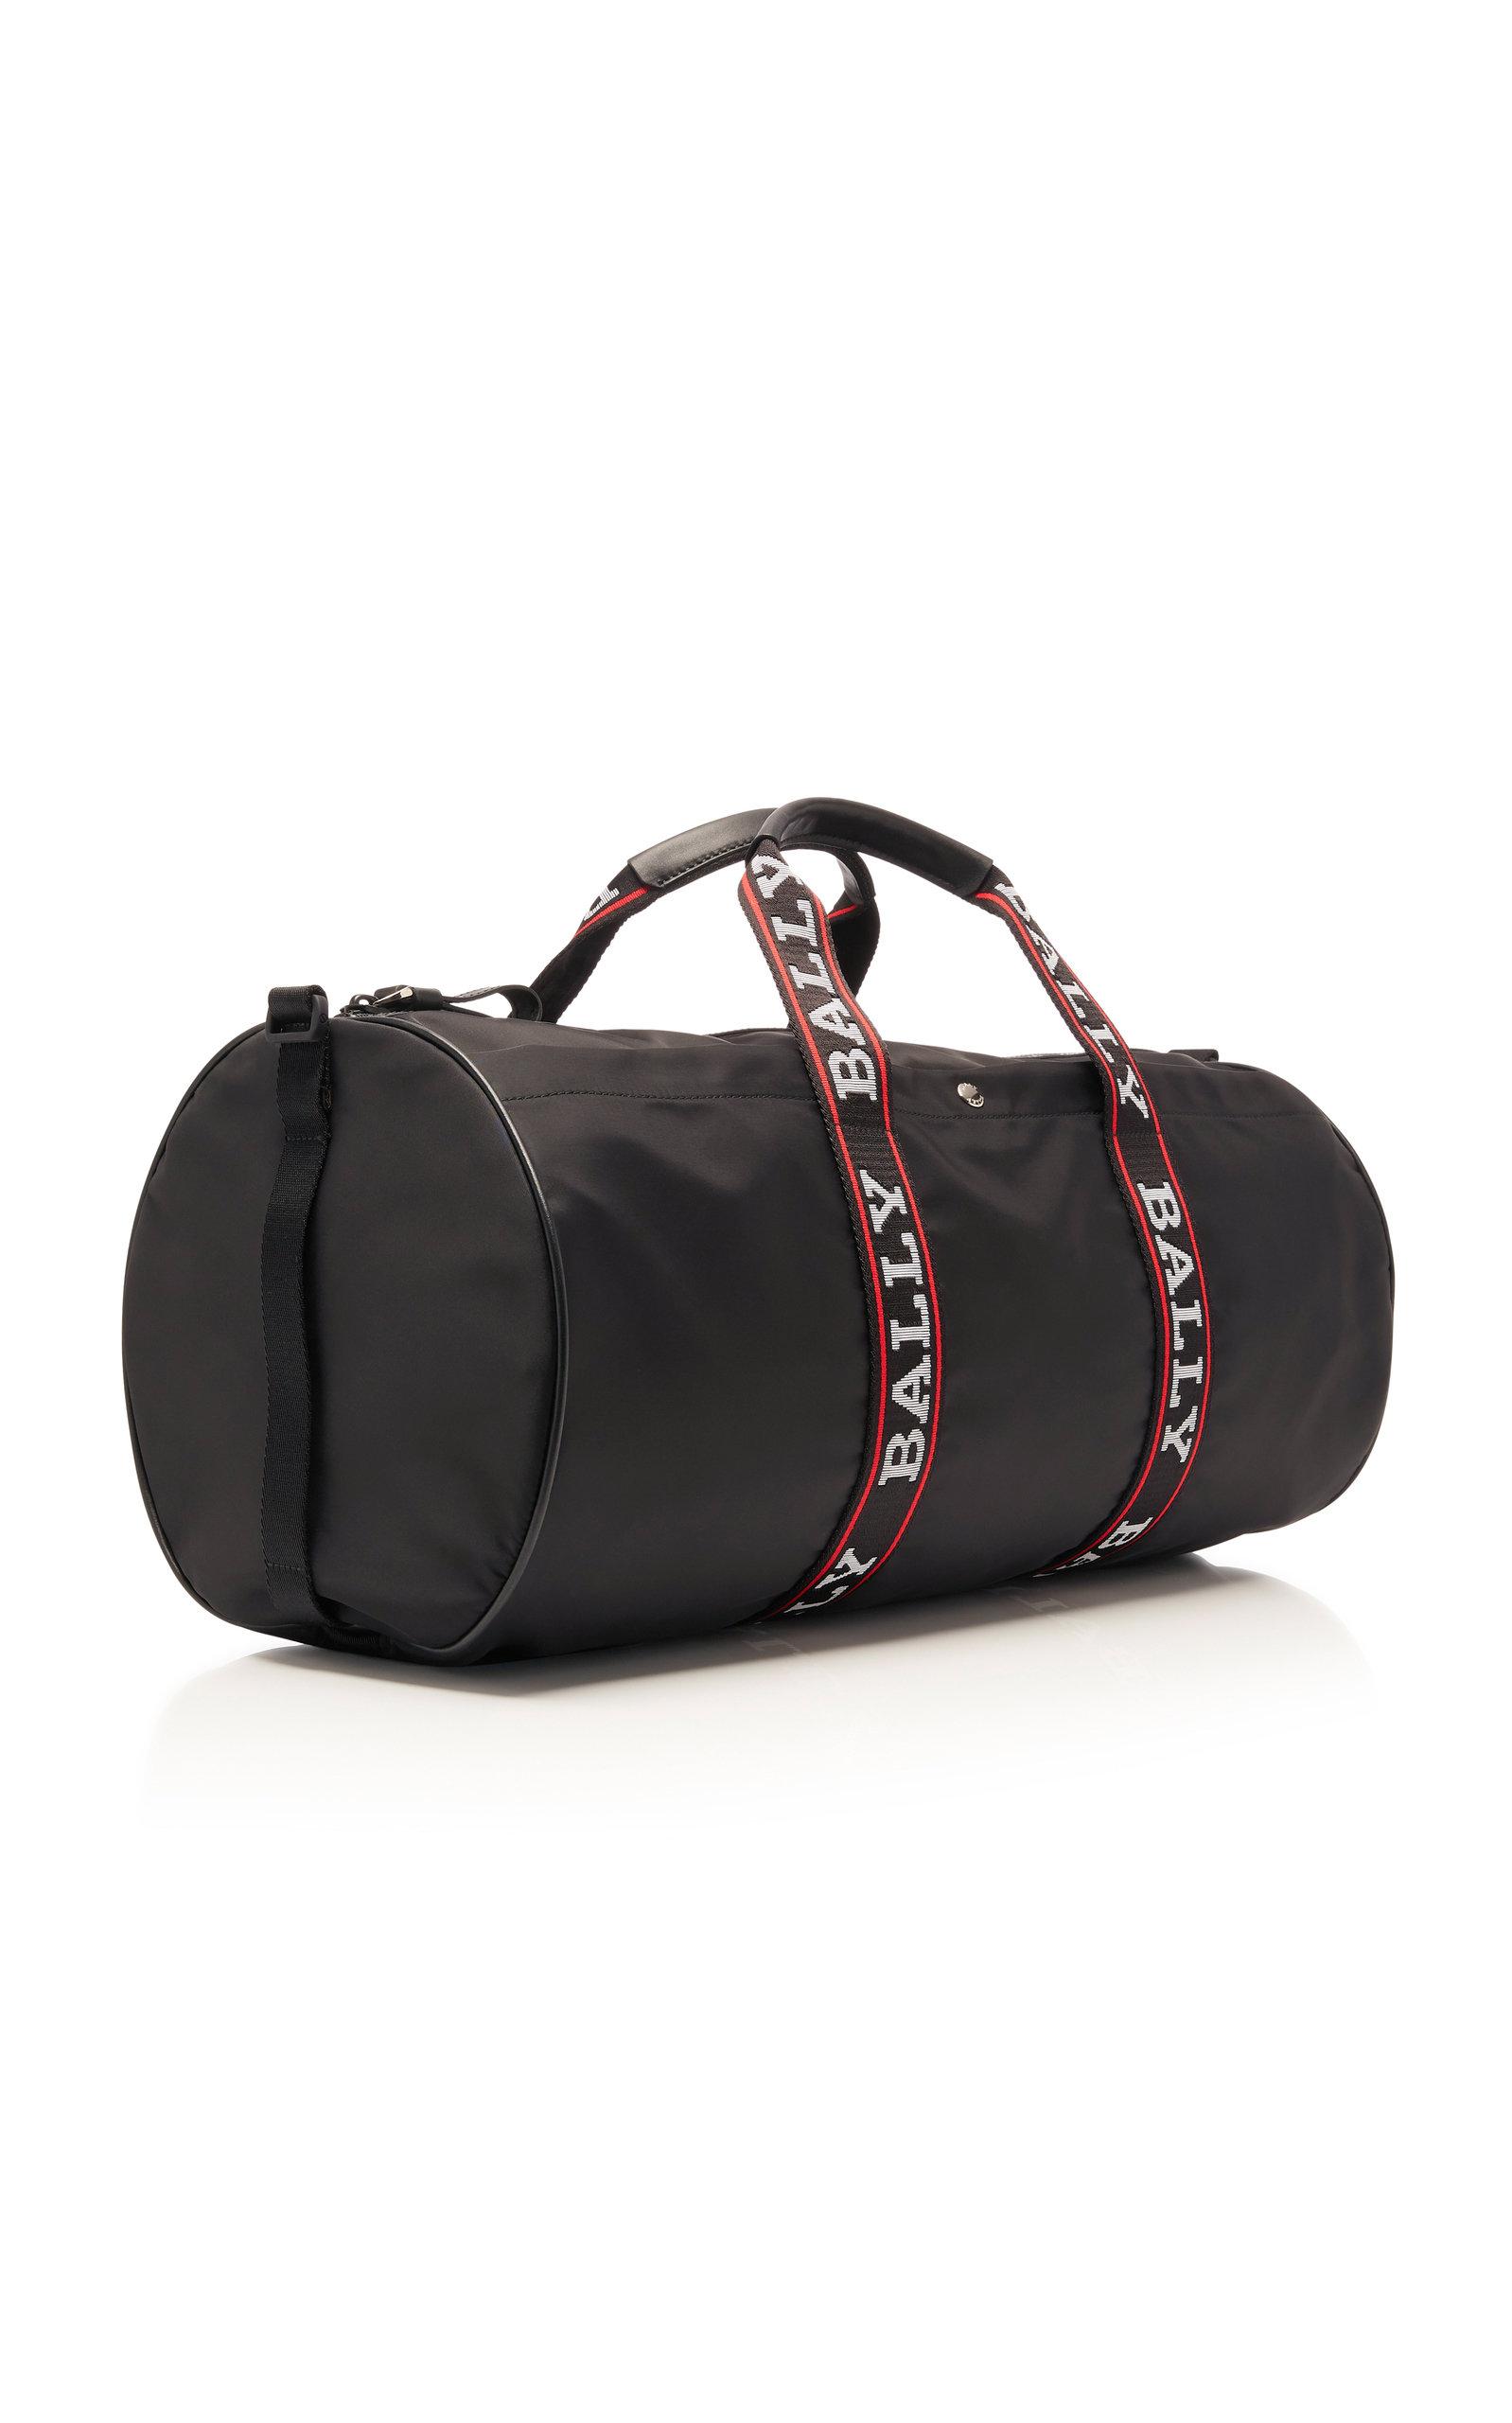 Bally Synthetic Nylon Logo Duffle Bag in Black for Men - Lyst